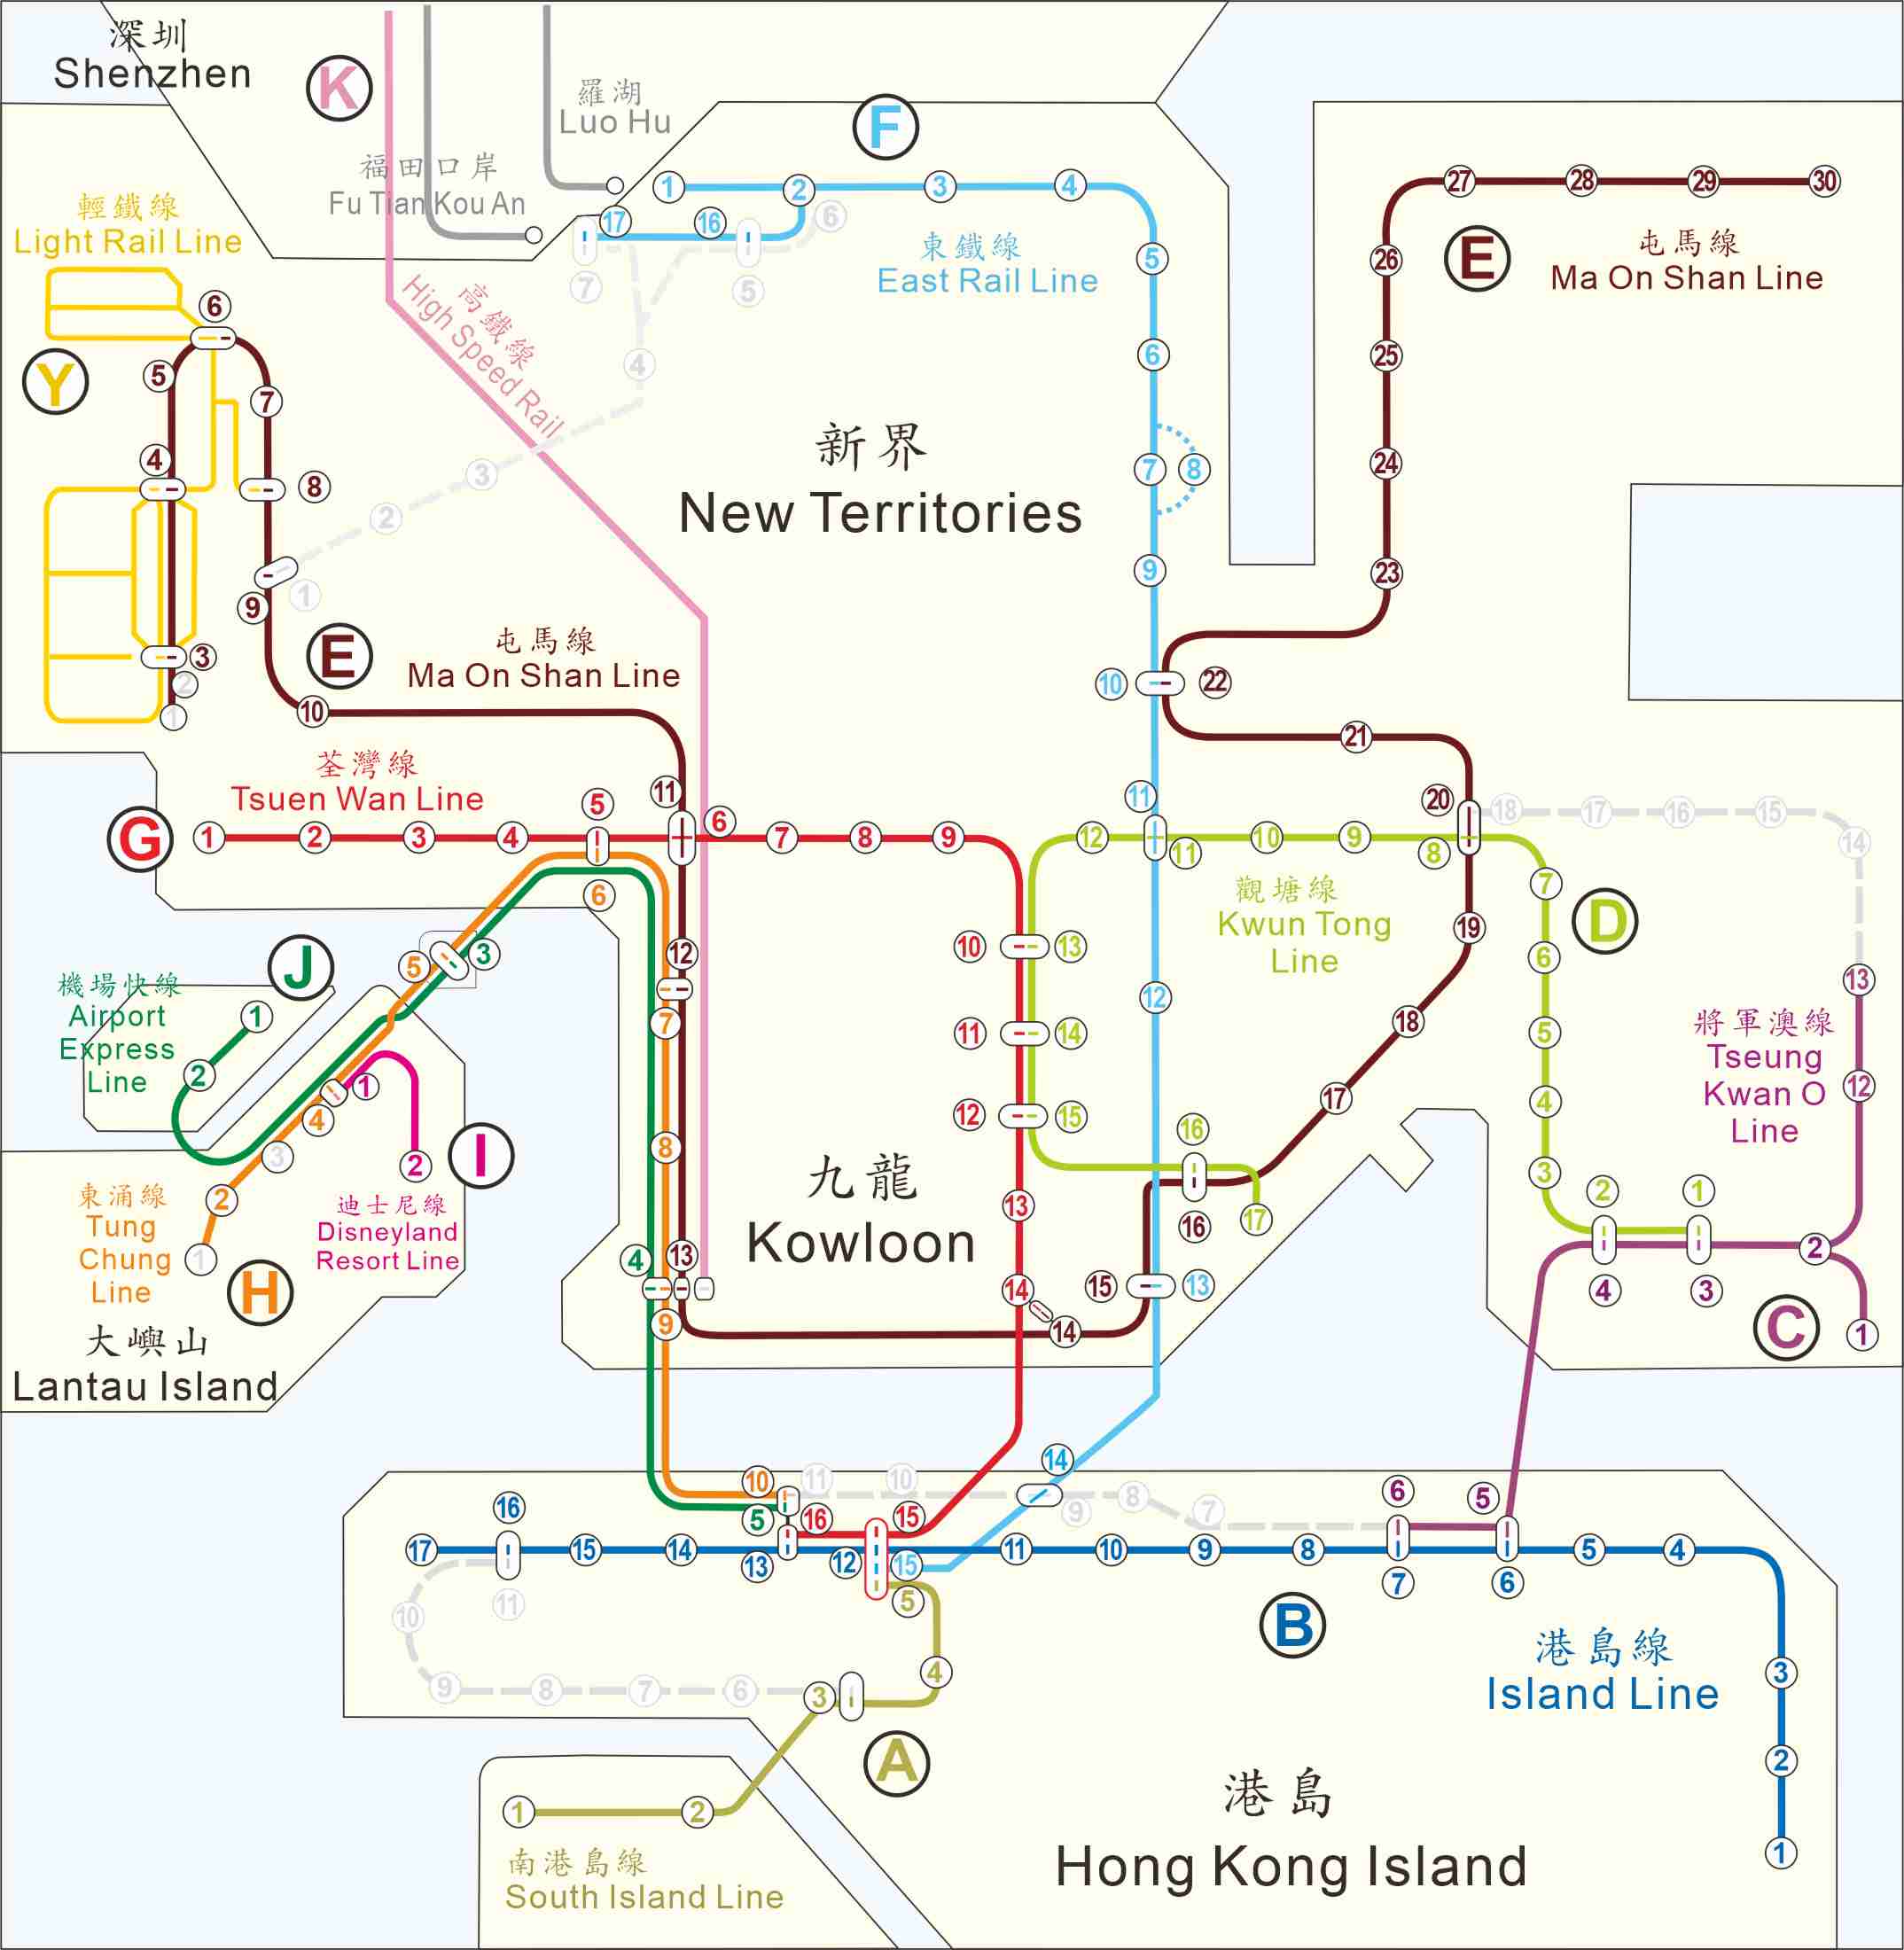 MTR - System Map
港鐵 - 路線圖